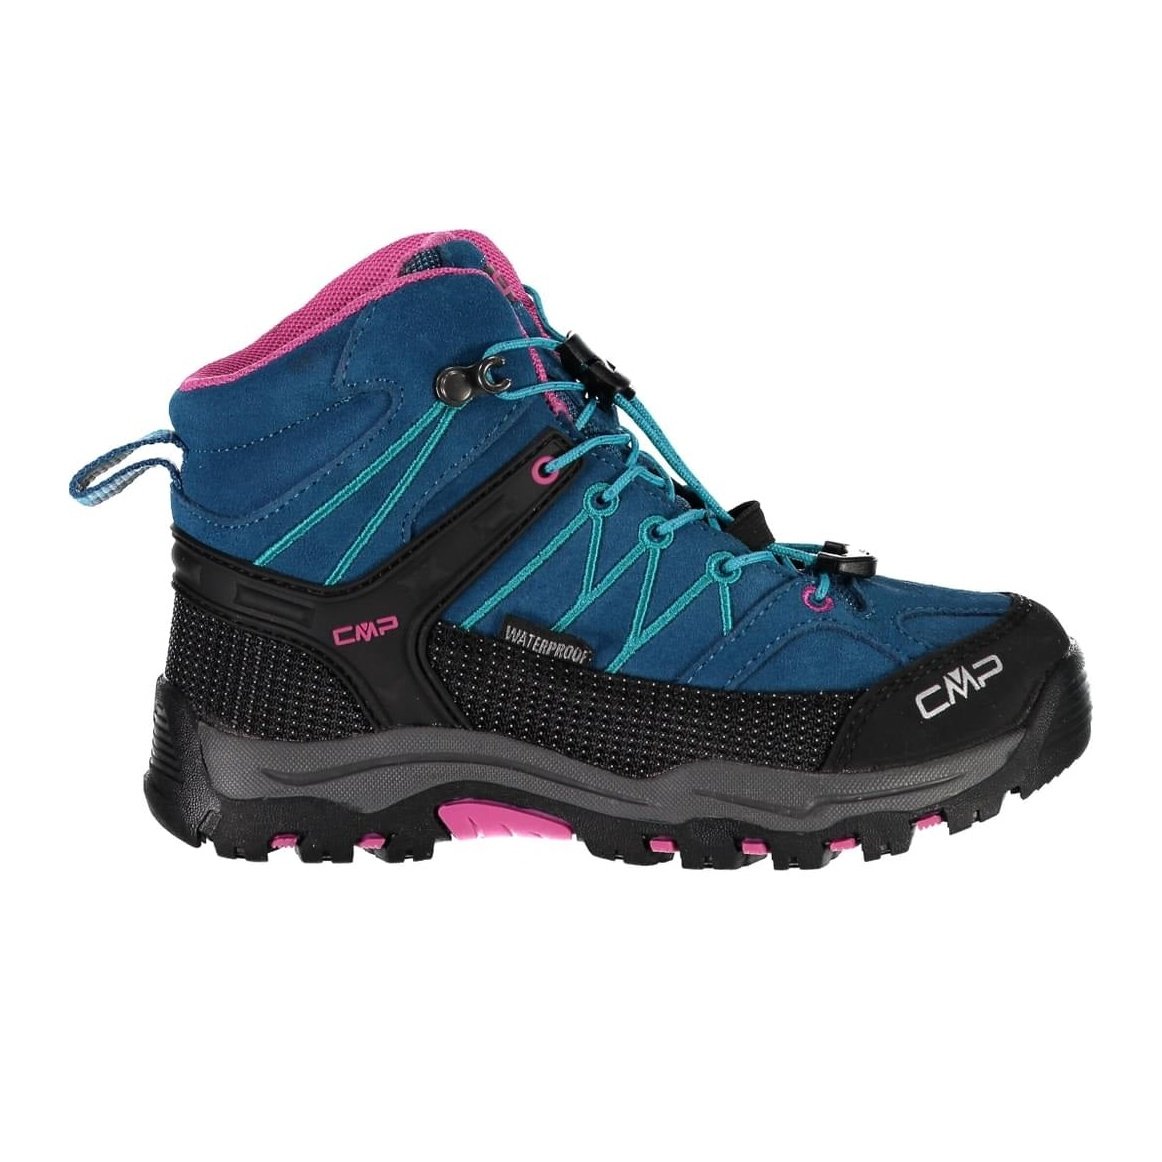 Cmp Kids Rigel Low Trekking Shoes Wp rosa zapatillas trekking niño